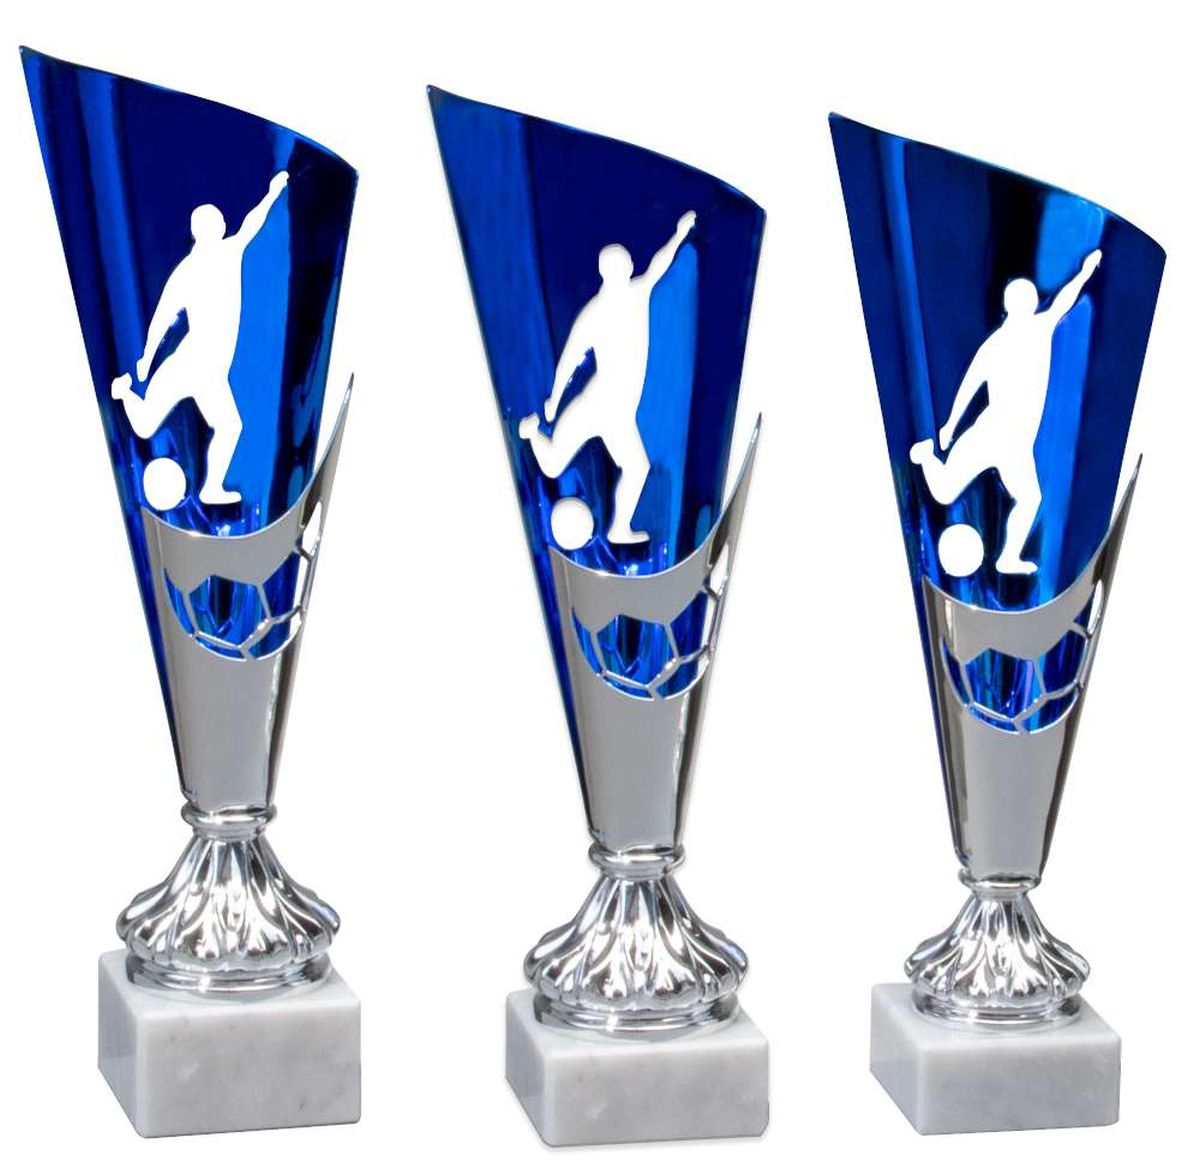 Pokal Soccer Silber/Blau - Größe: 322mm